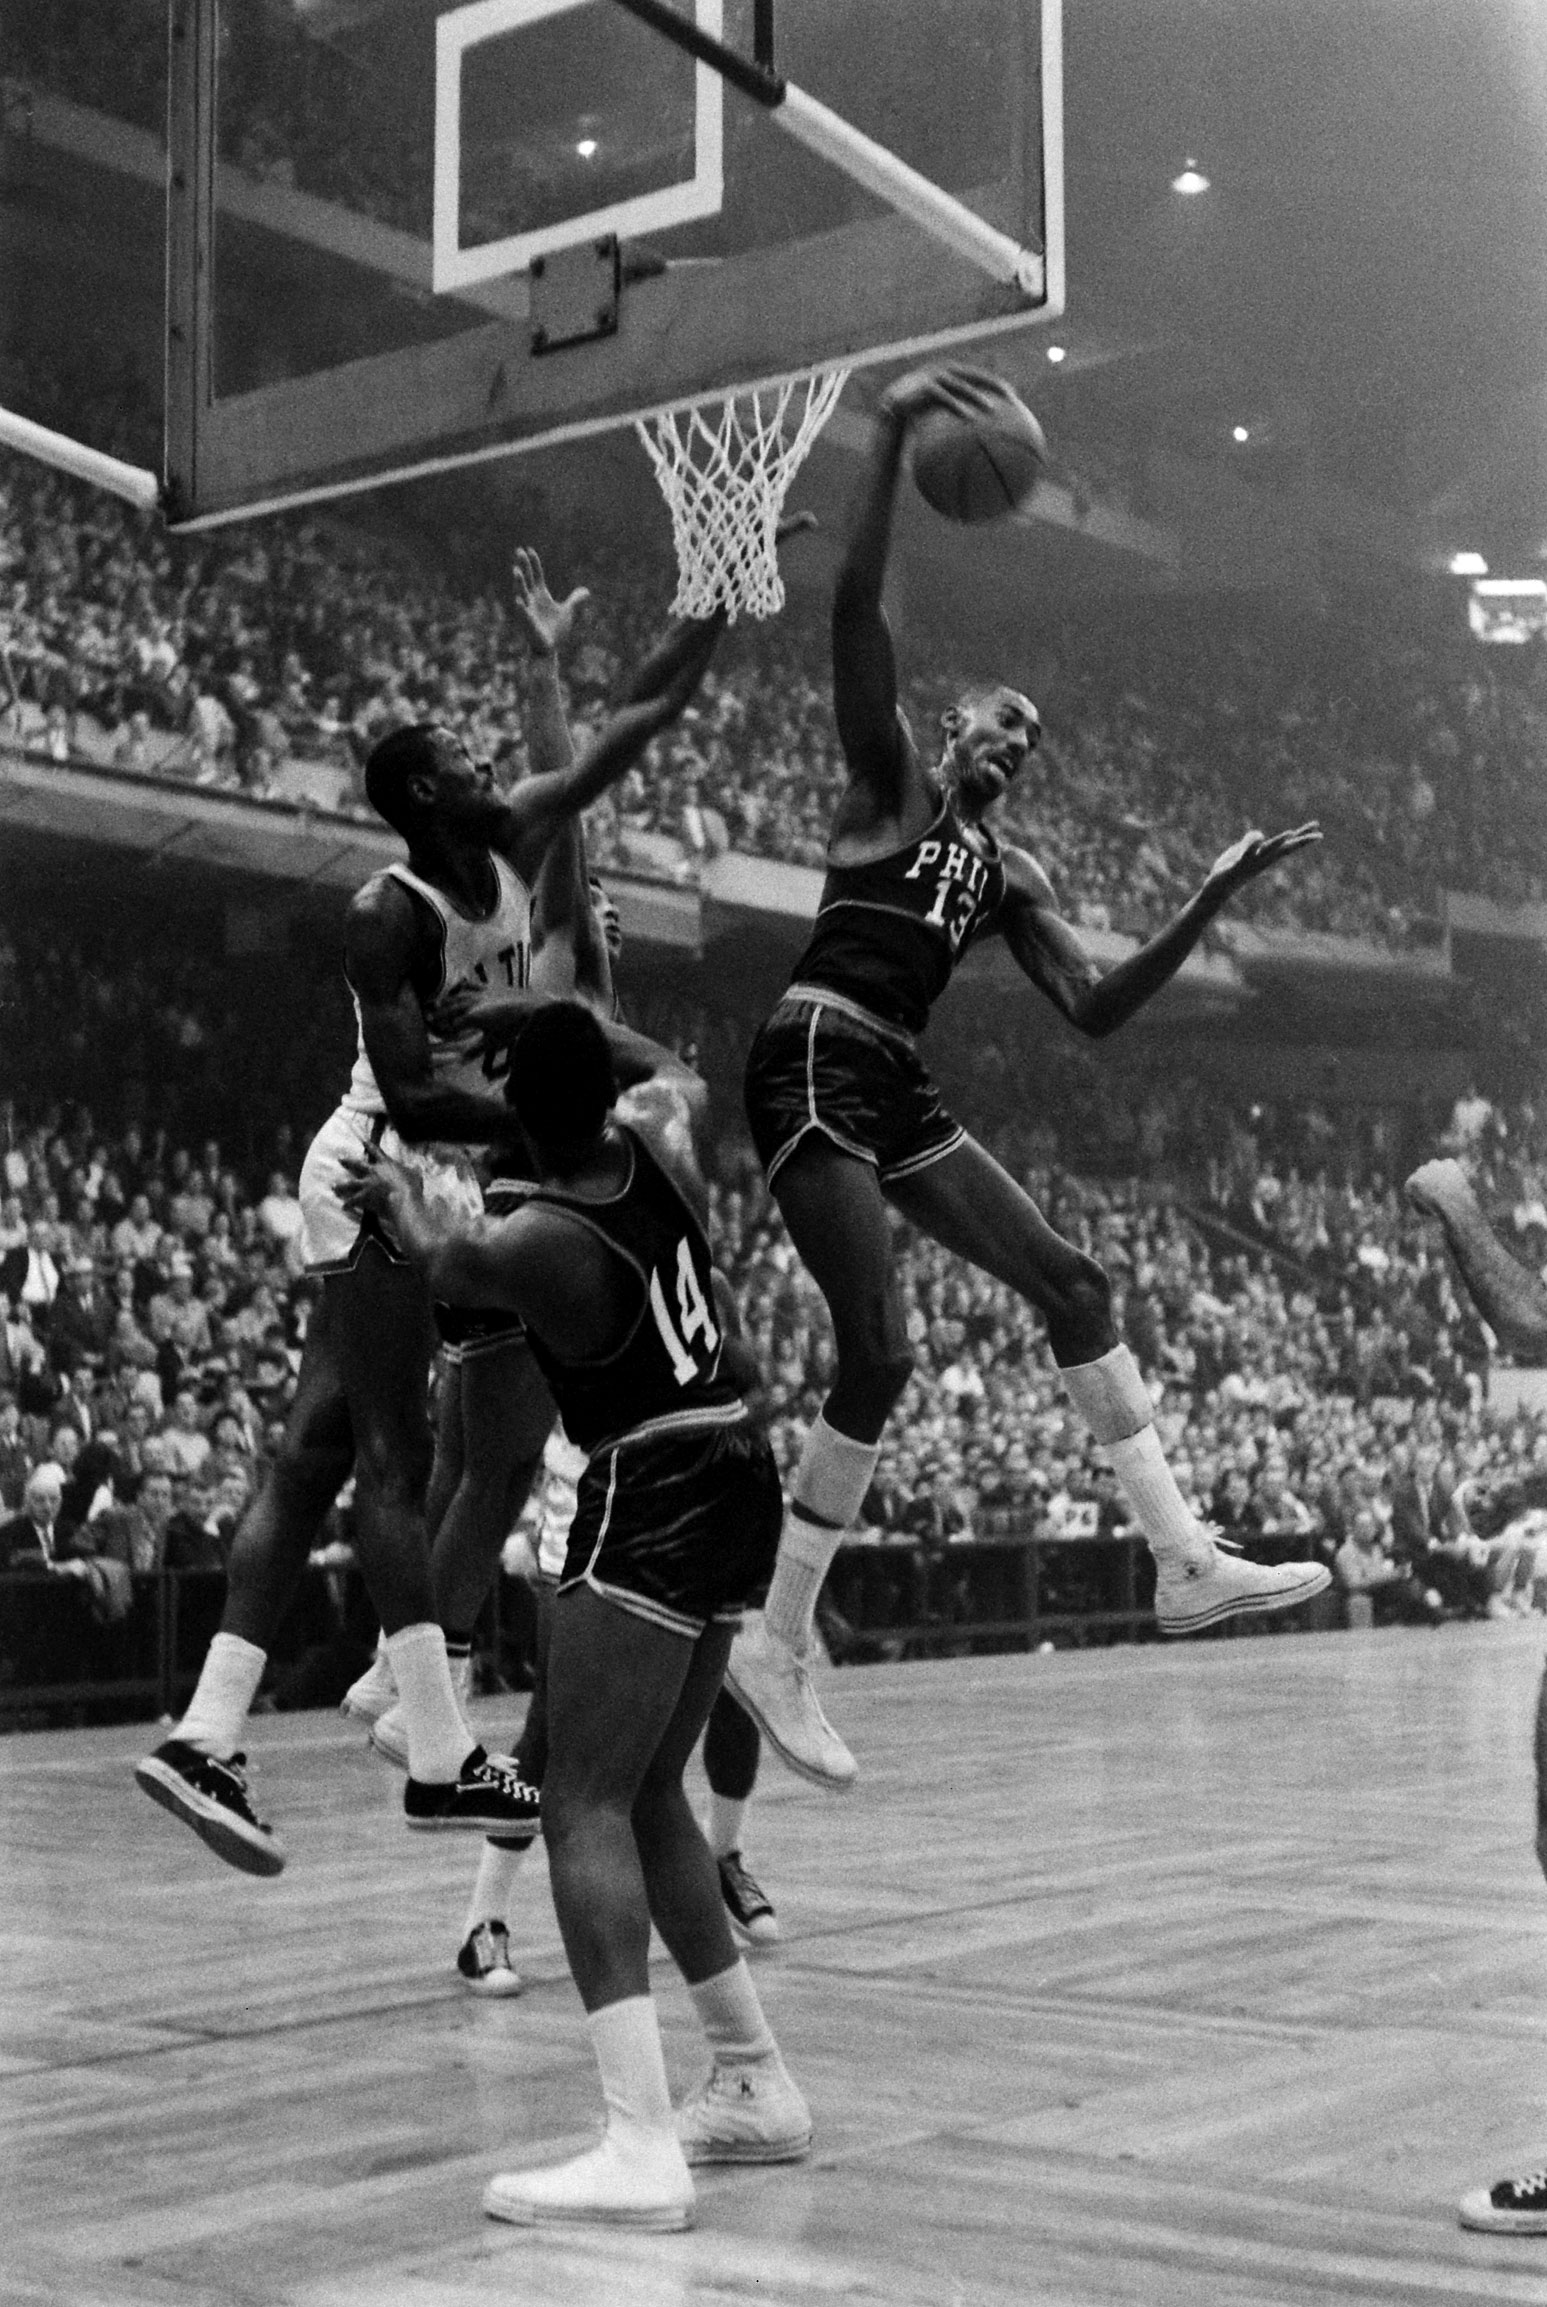 Basketball player Wilt Chamberlain during game against the Celtics, 1959.